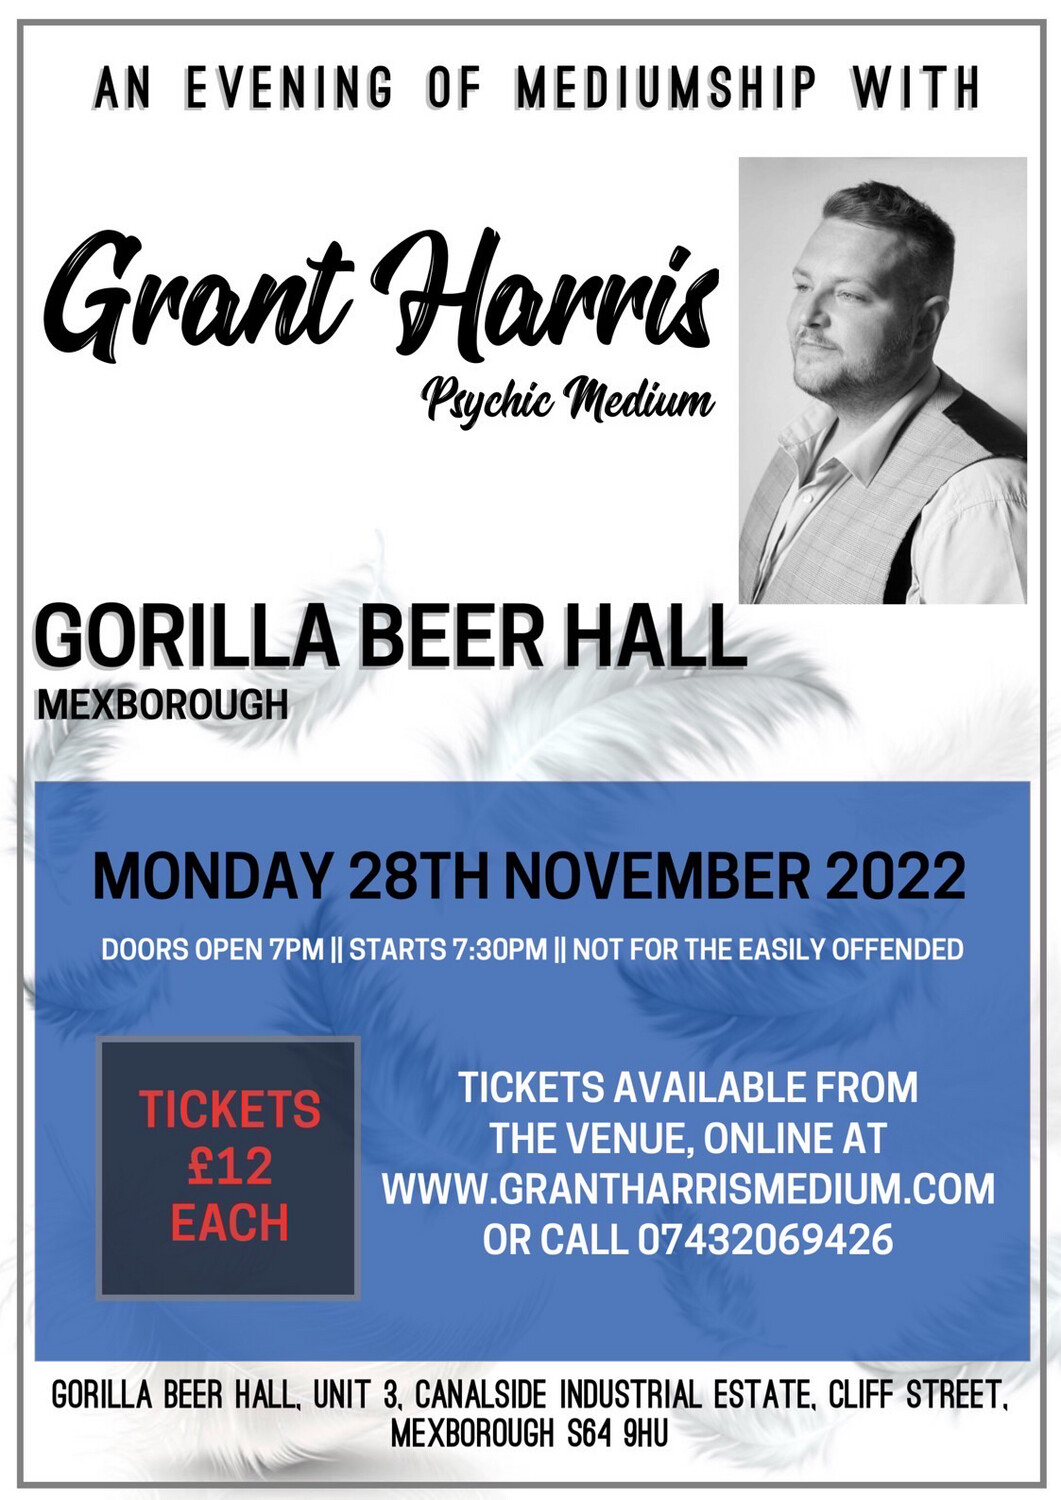 Gorilla Beer Hall, Mexborough, Mon 28th November 2022